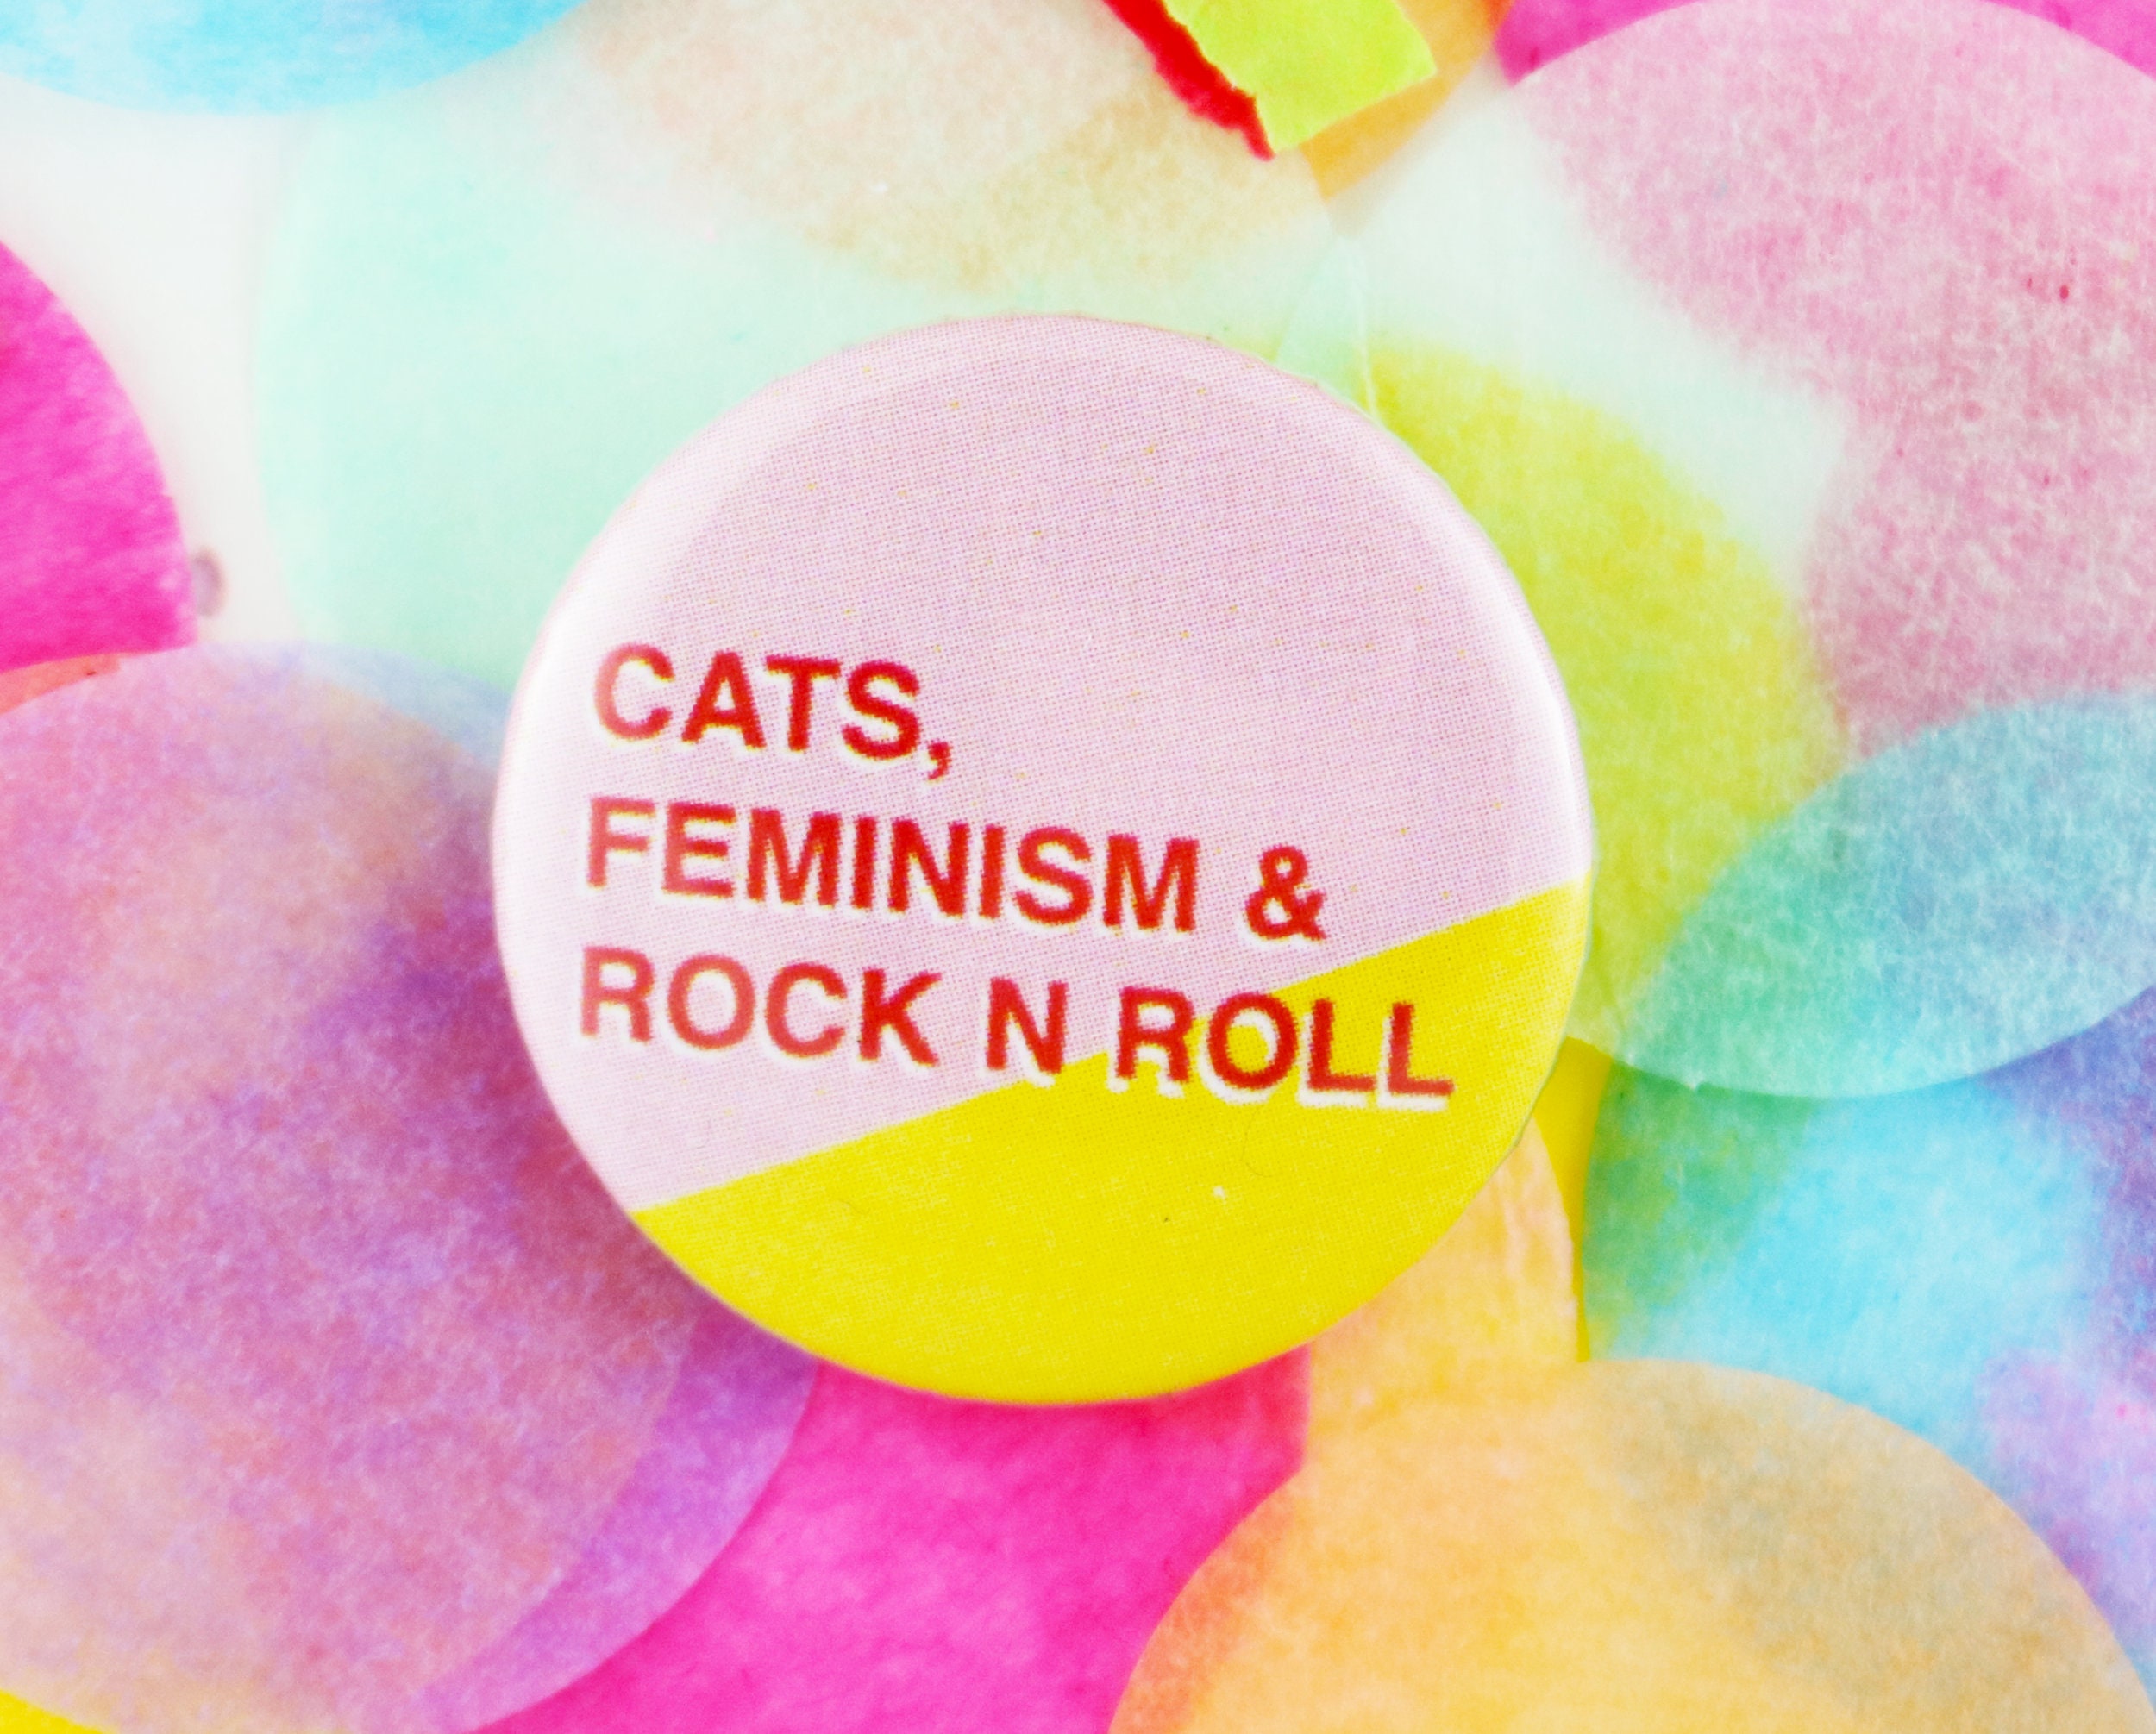 FEMINIST KILLJOY 1" 25mm Pin Button Badge Novelty Message Humour Feminism 2 